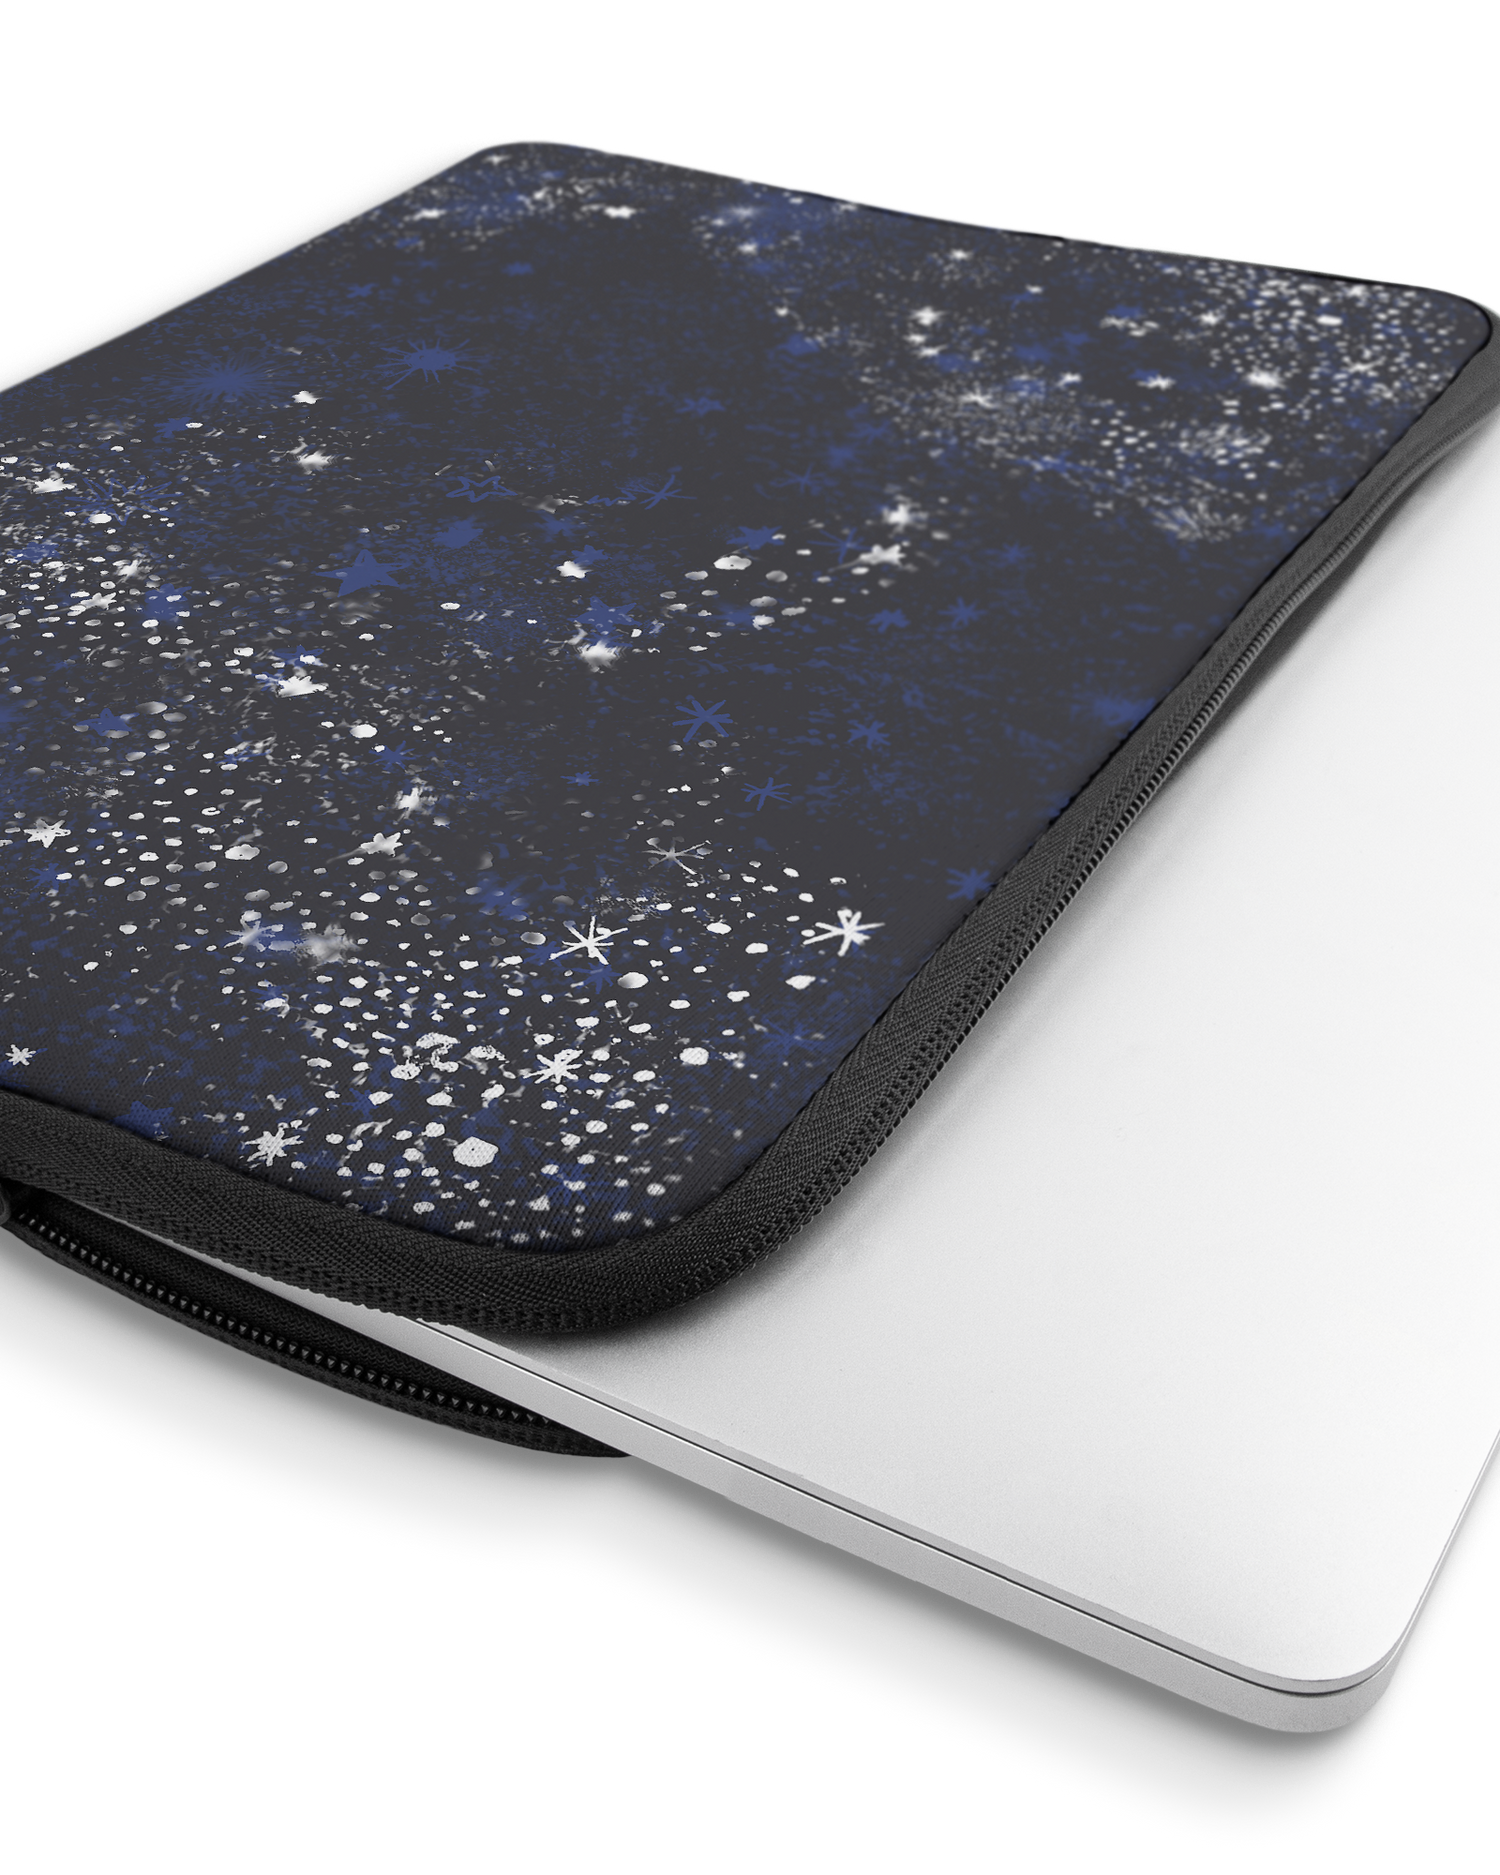 Starry Night Sky Laptop Case 16 inch with device inside